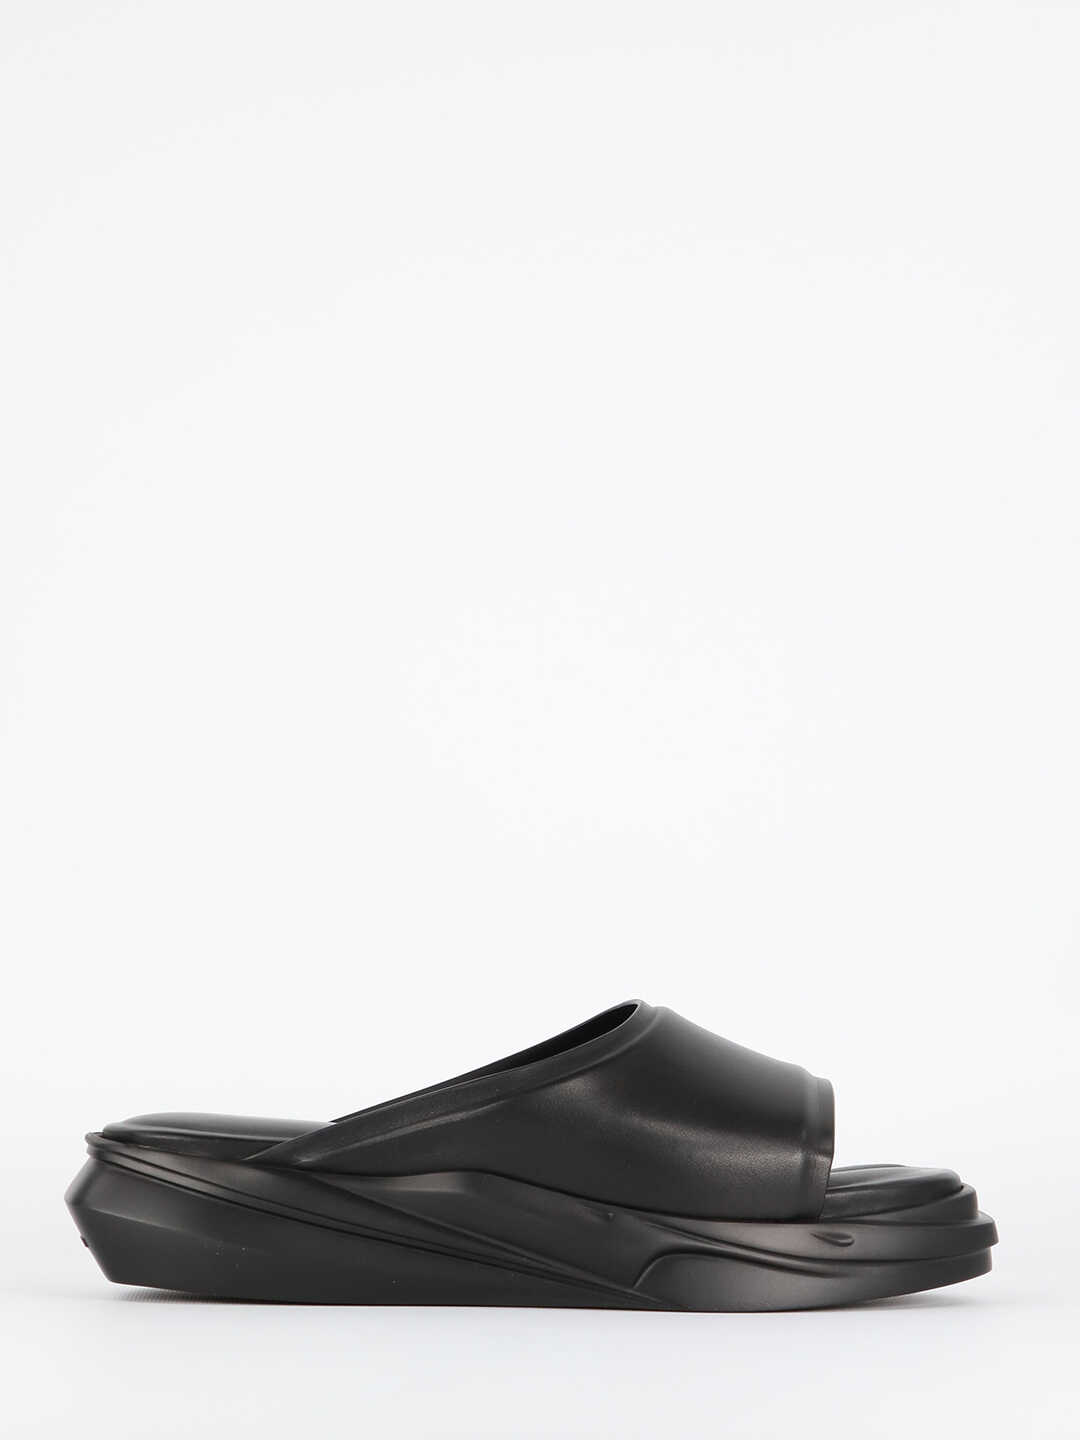 Alyx Leather Sandals Black Alyx